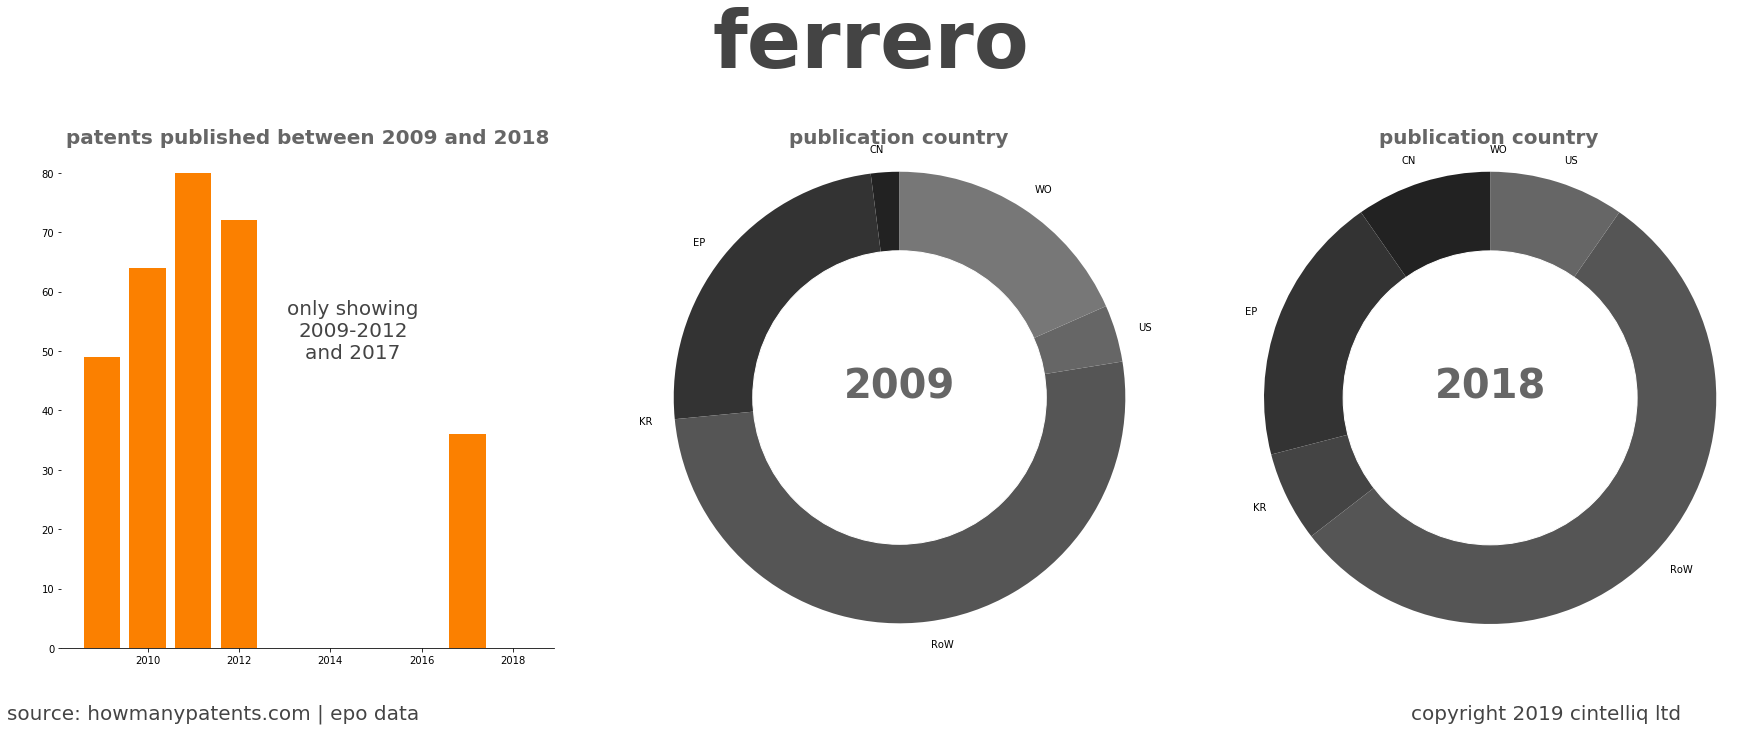 summary of patents for Ferrero